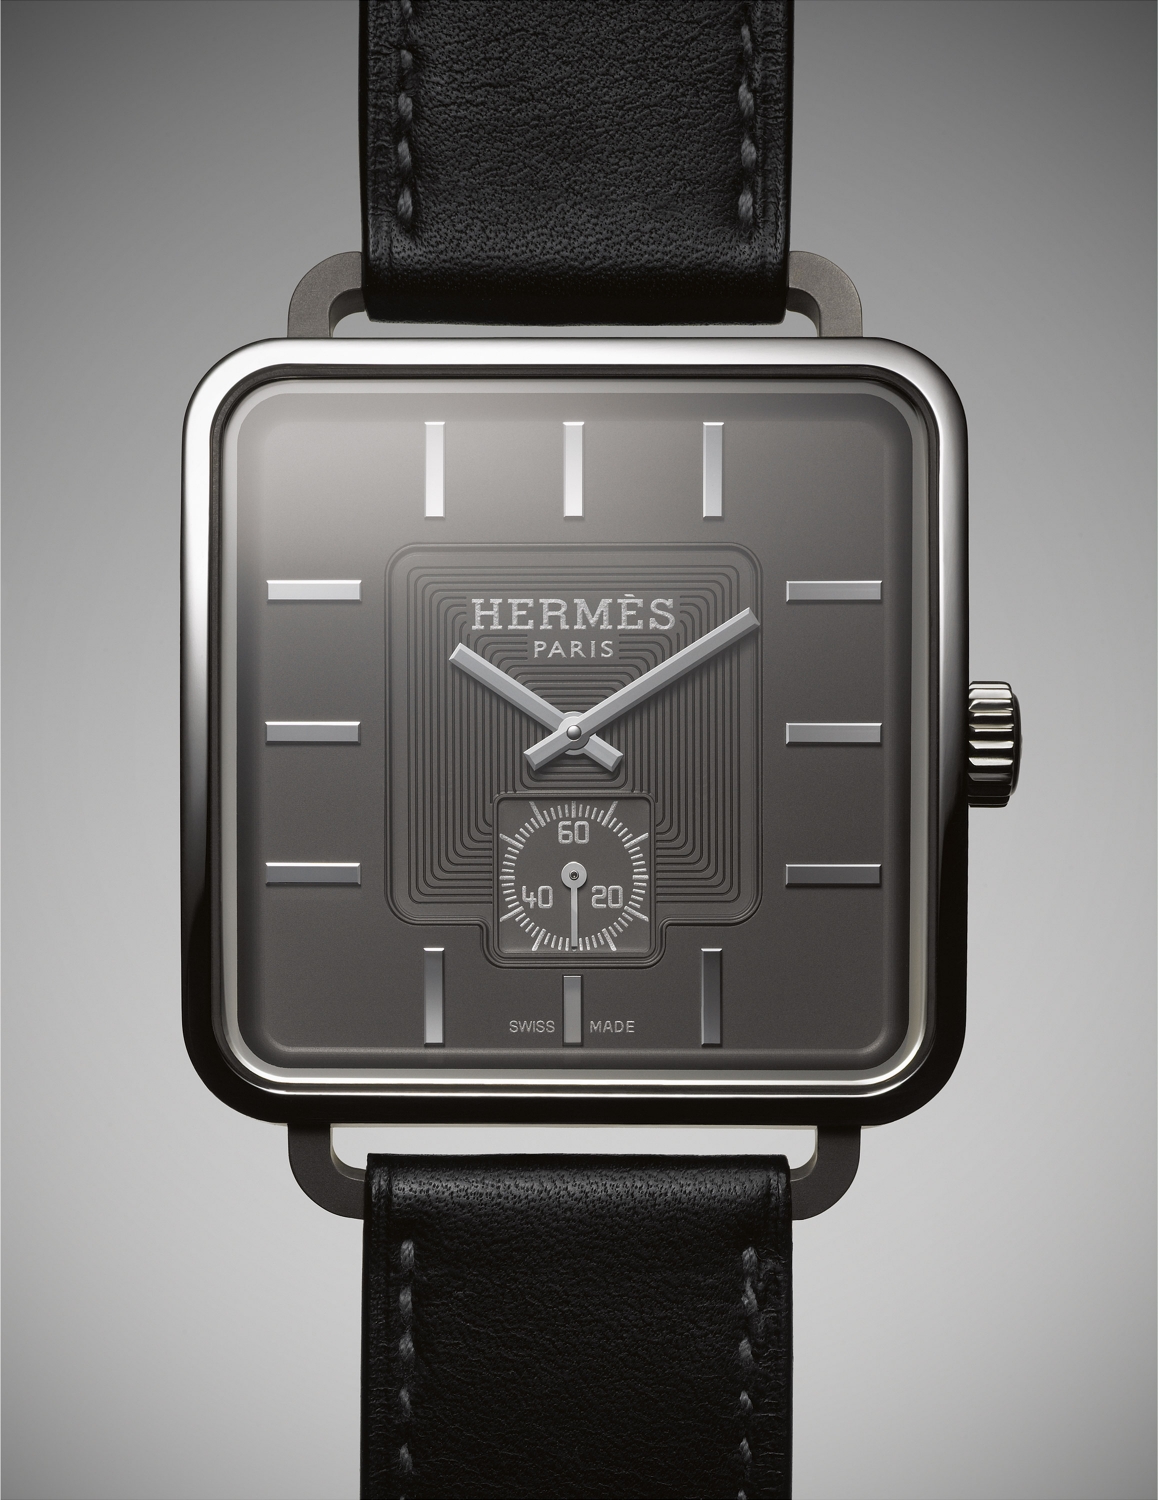 hermes paris watch price